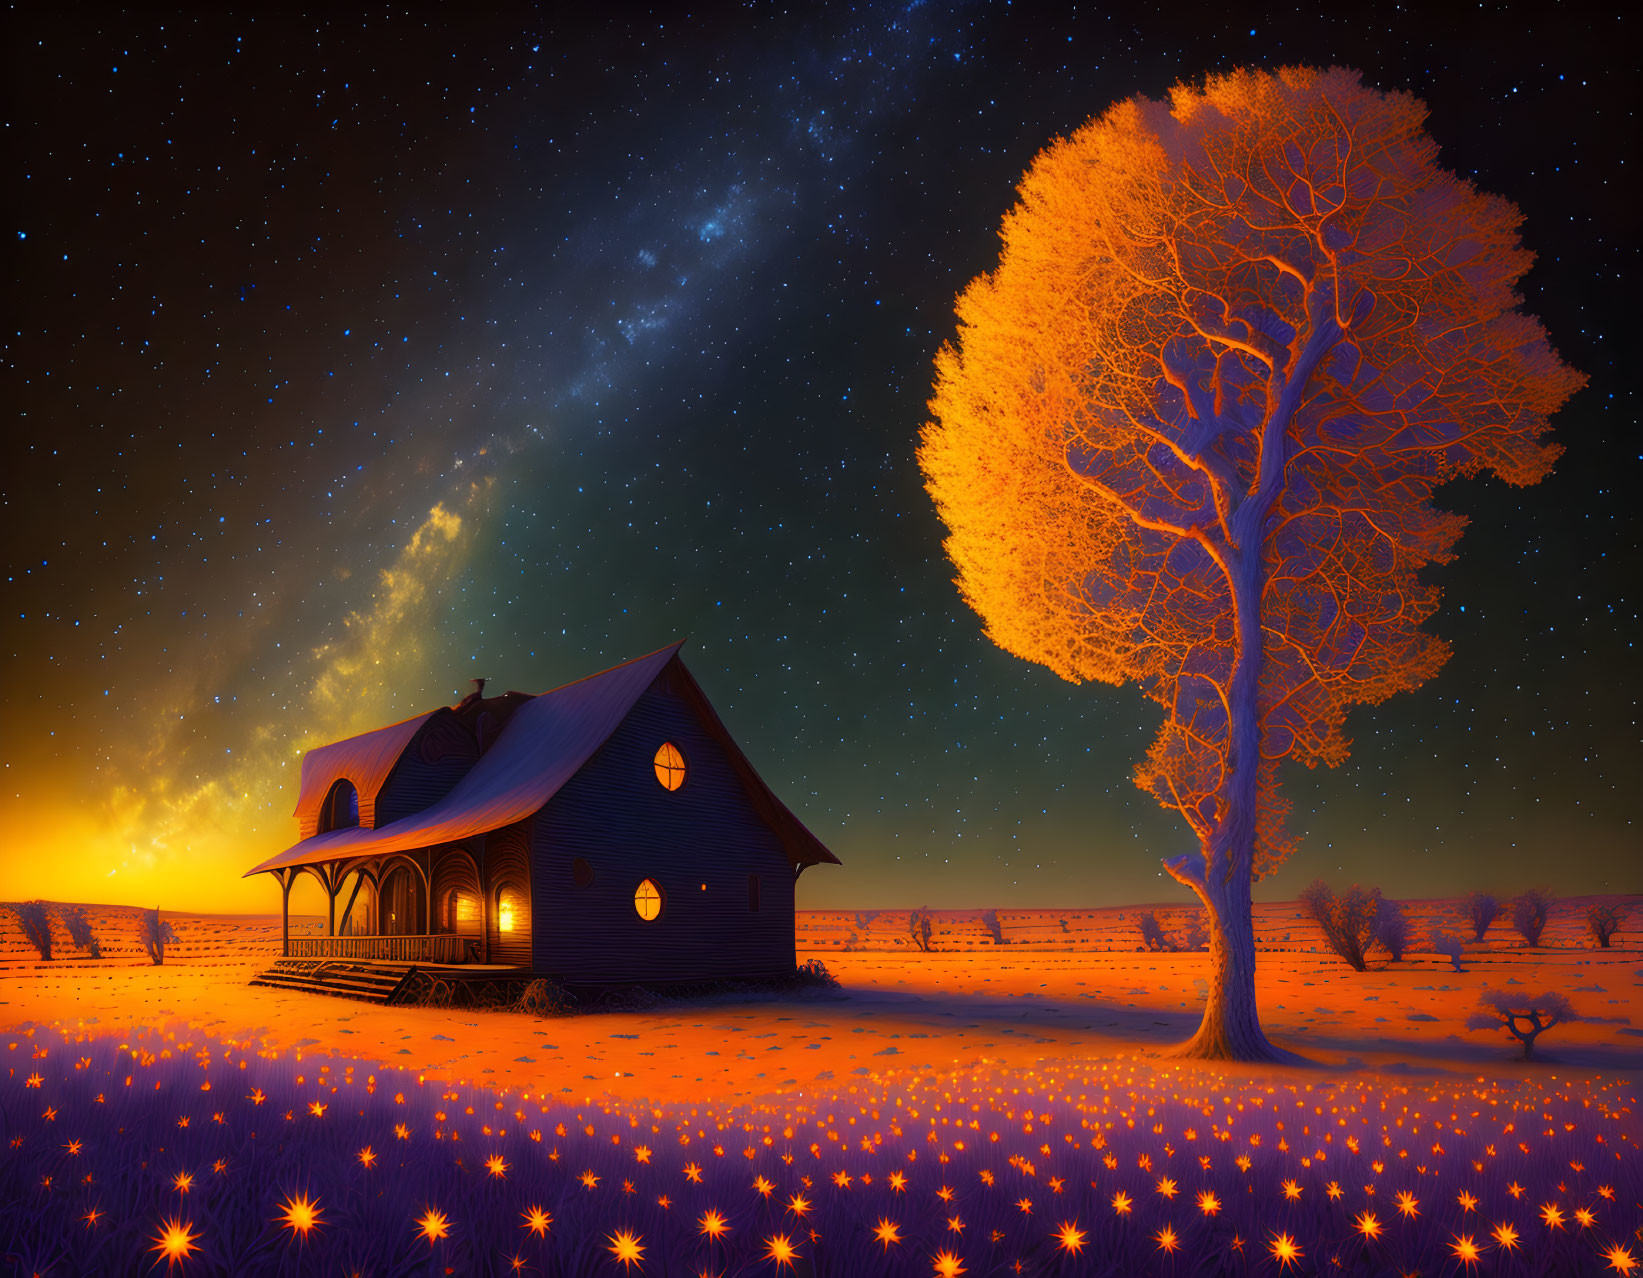 Twilight scene of glowing house, starlit sky, and radiant tree